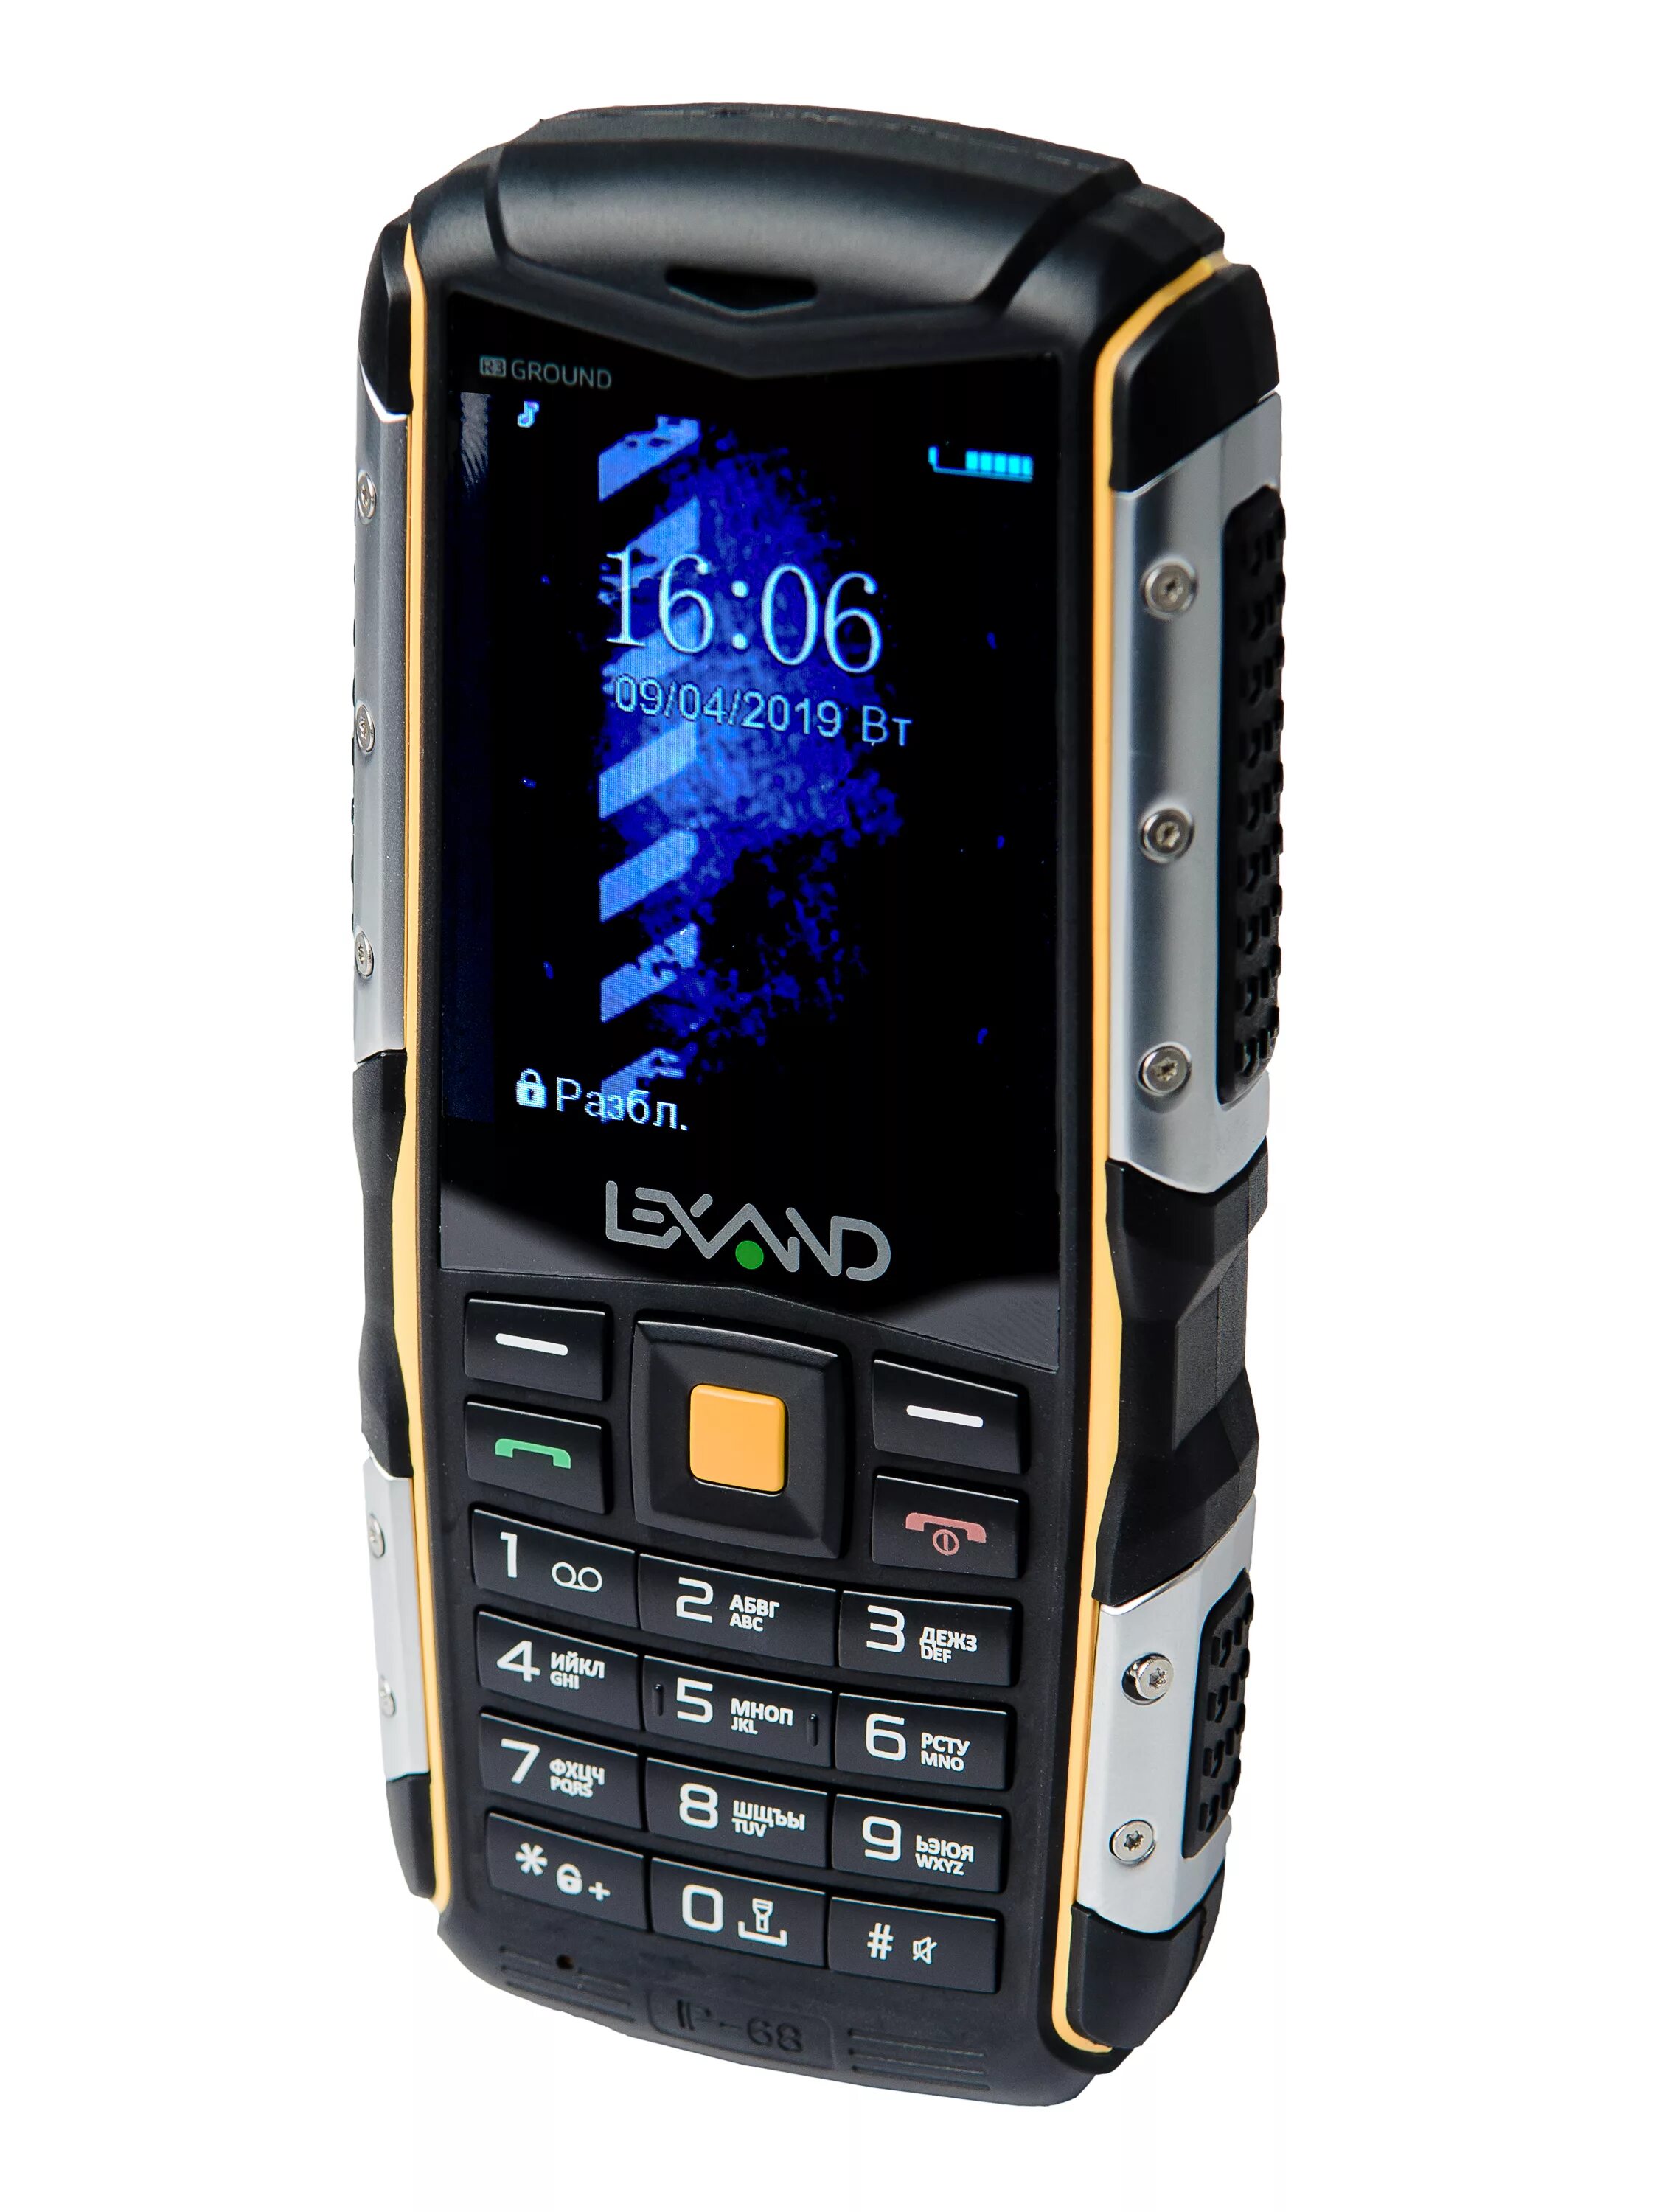 Lexand r3 ground. Lexand r3 ground аккумулятор. Кнопочный телефон. Сотовый телефон кнопочный.